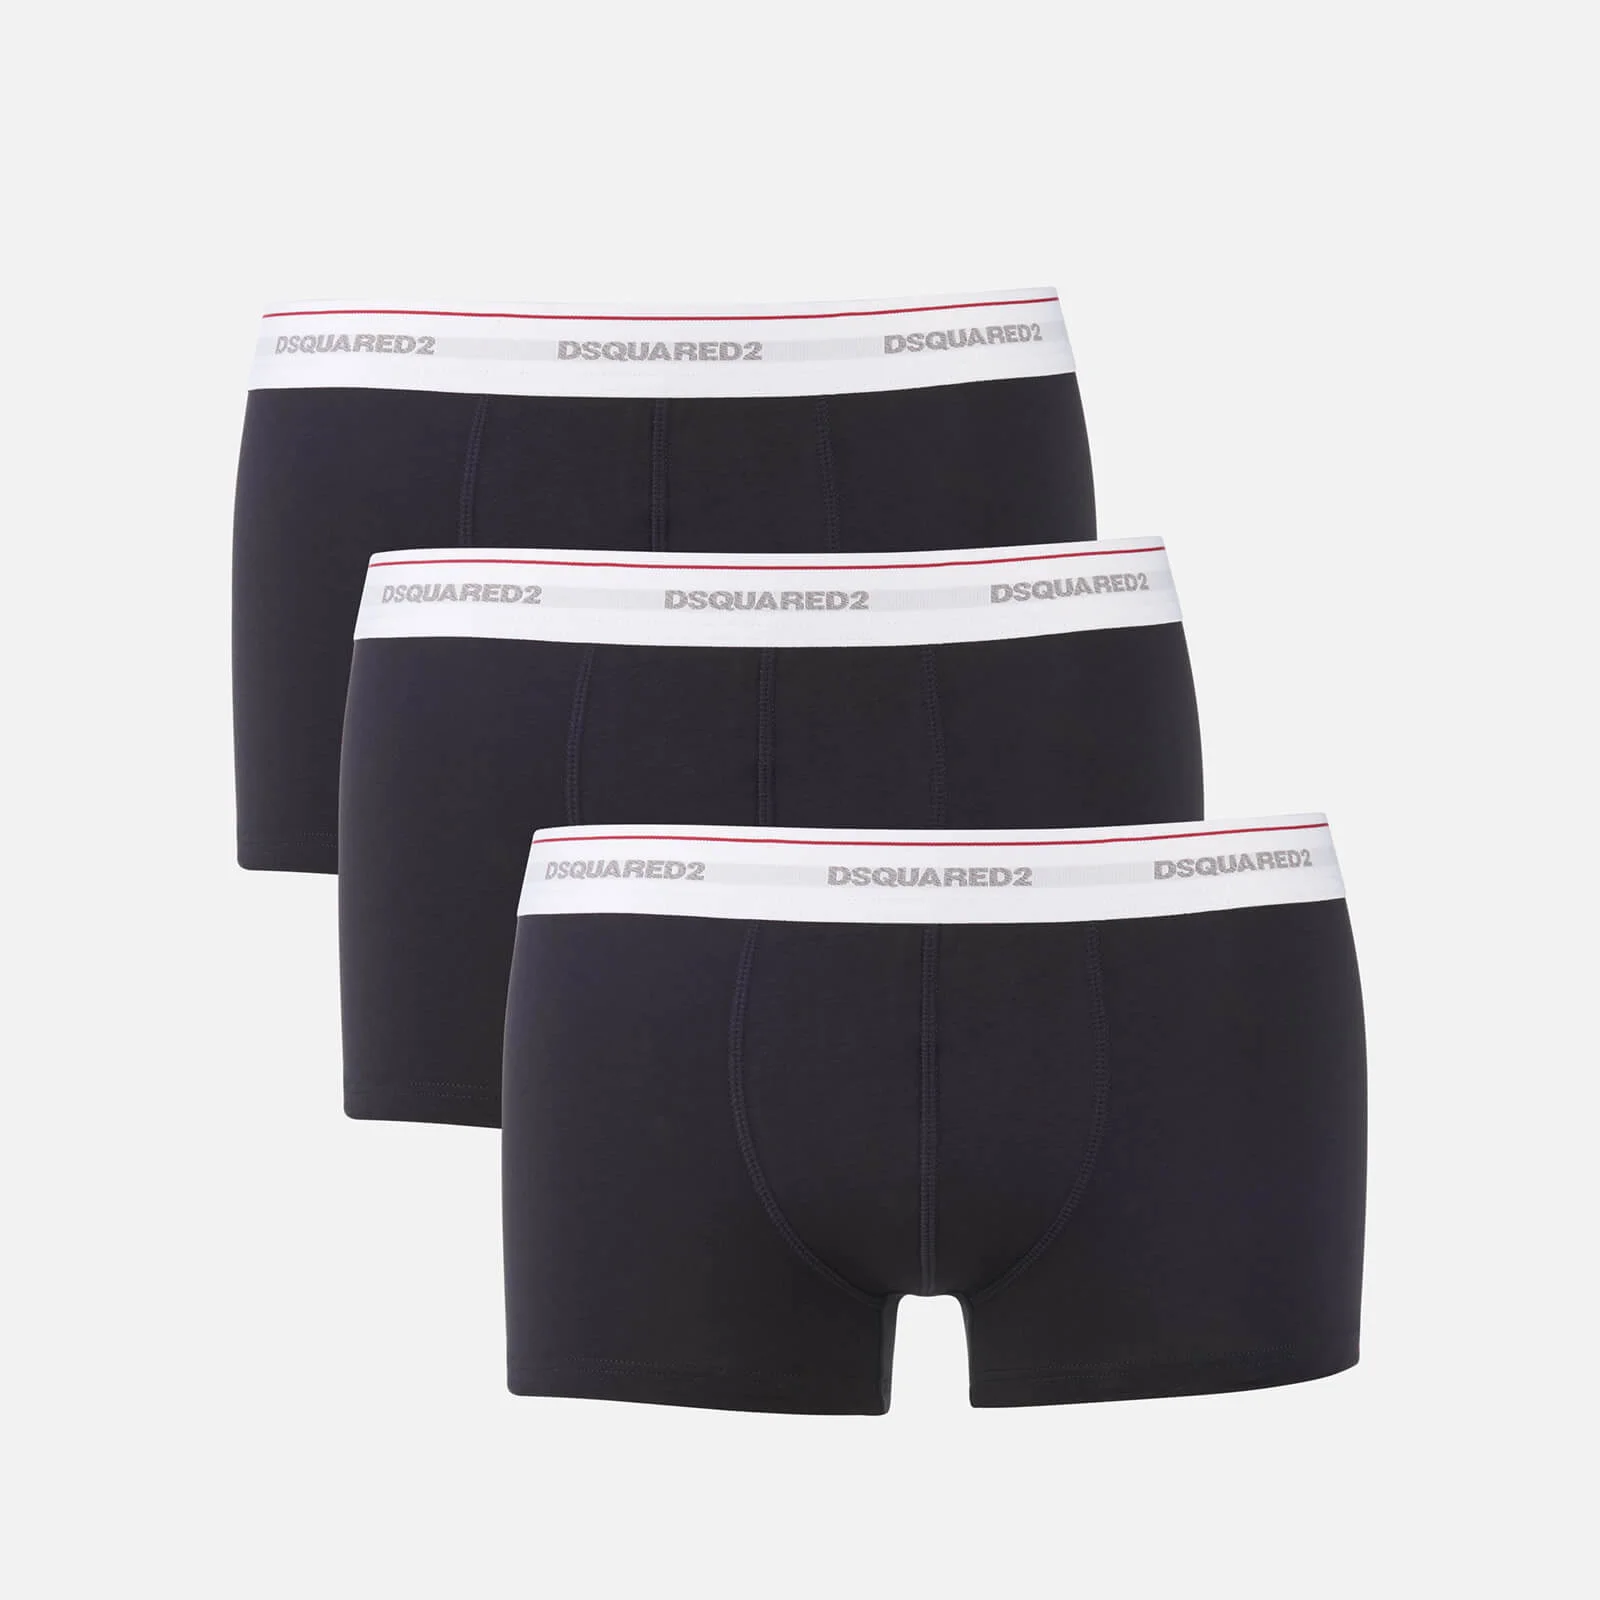 Dsquared2 Men's Triple Pack Trunk Boxer Shorts - Black Image 1